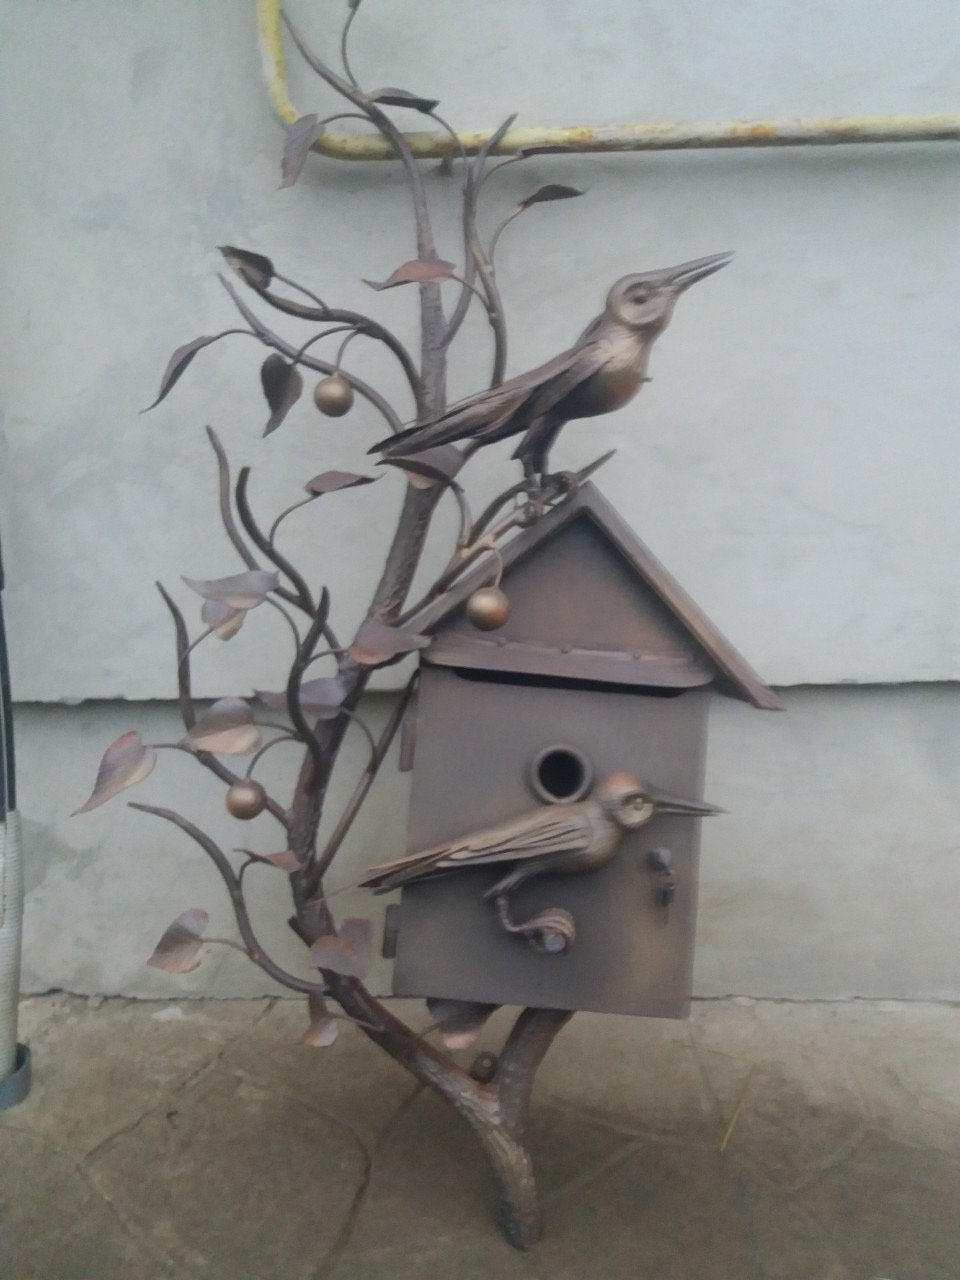 Mail box, mailbox, iron gift, Christmas, birthday, bird decor, anniversary gift, mother gift, garden gift, yard decor, postbox, post box